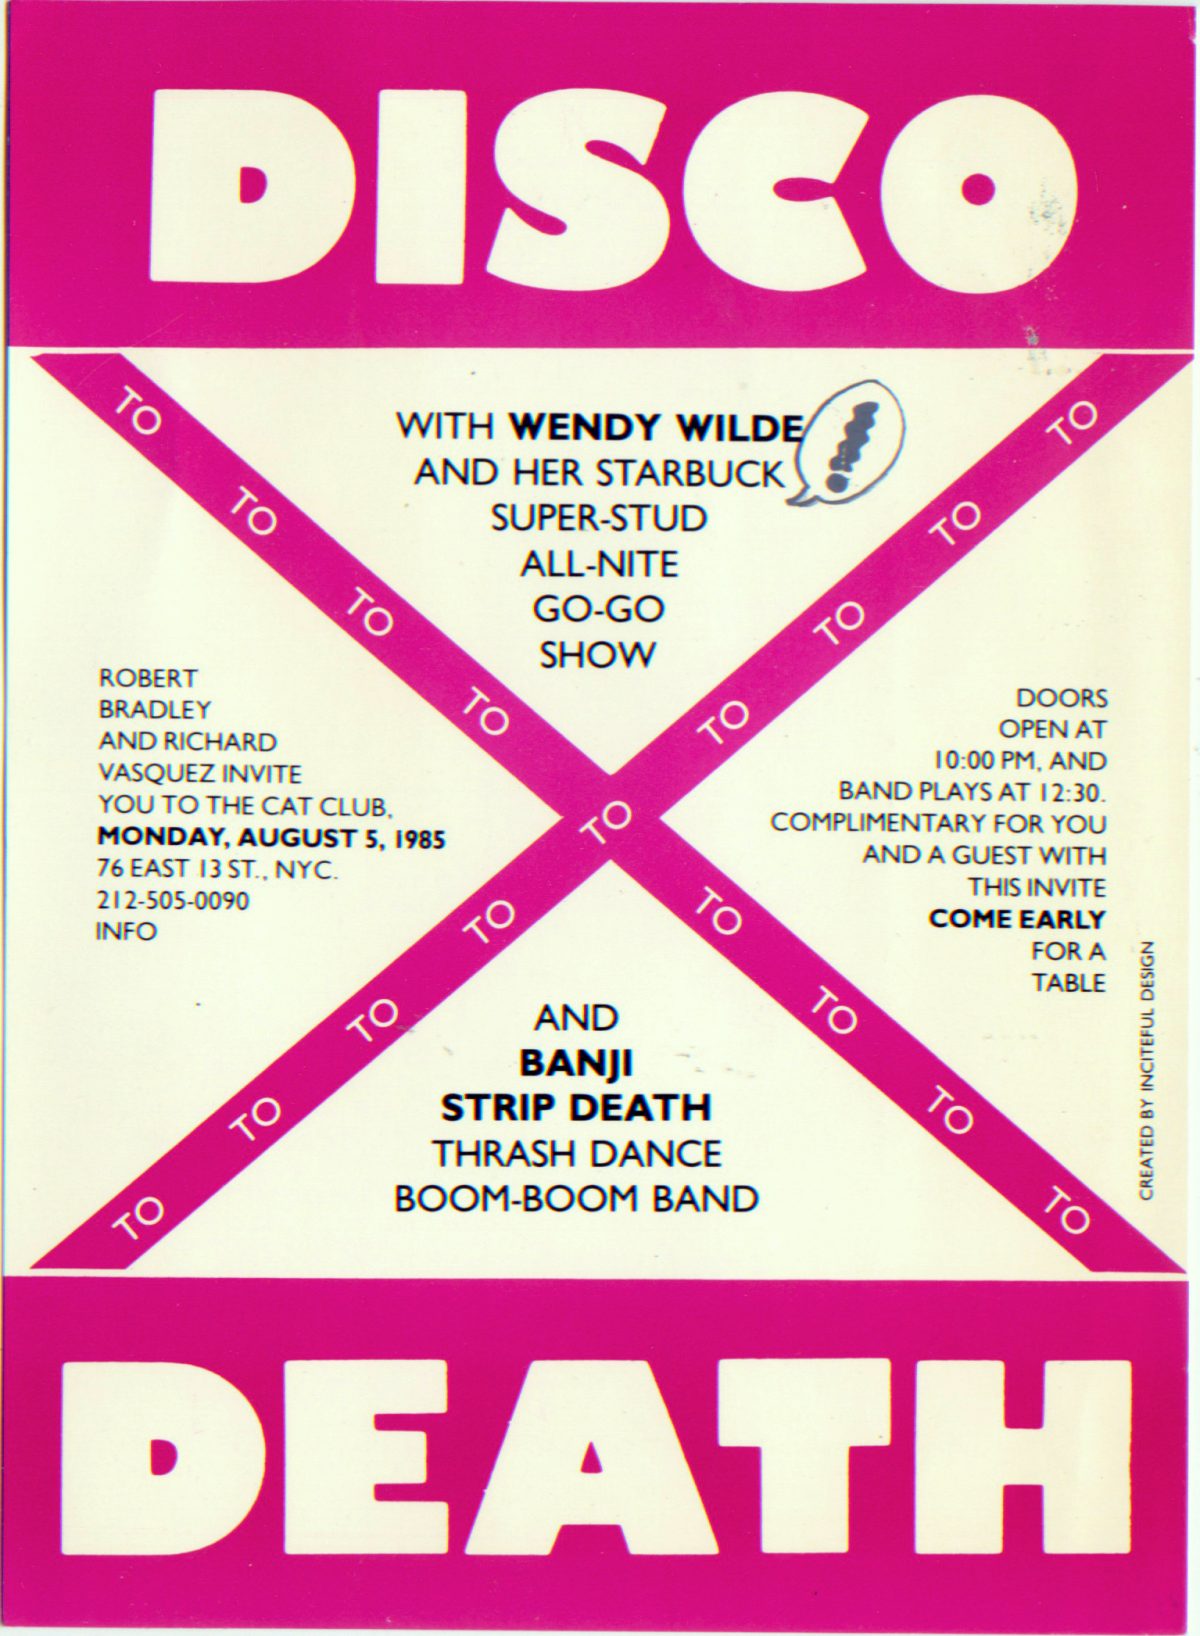 New York city night clubs 1980s 1970sl